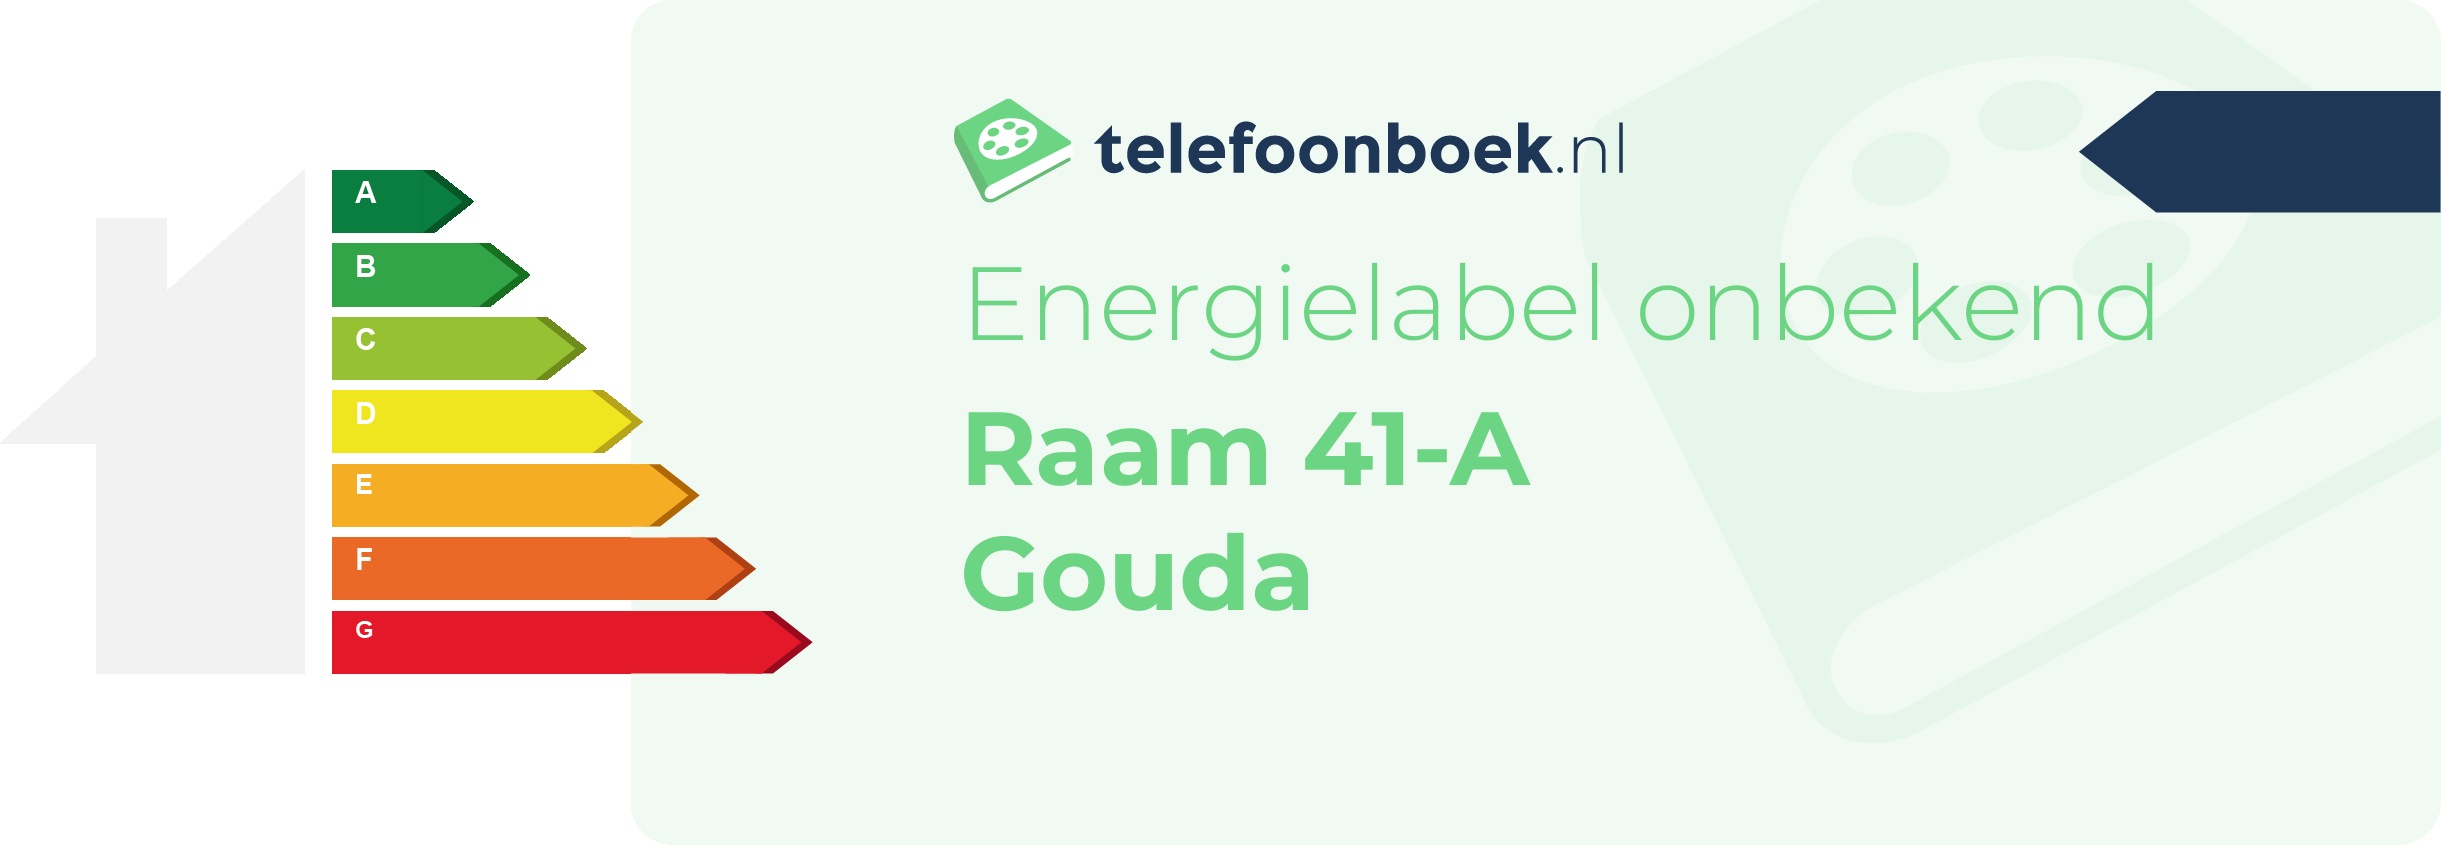 Energielabel Raam 41-A Gouda